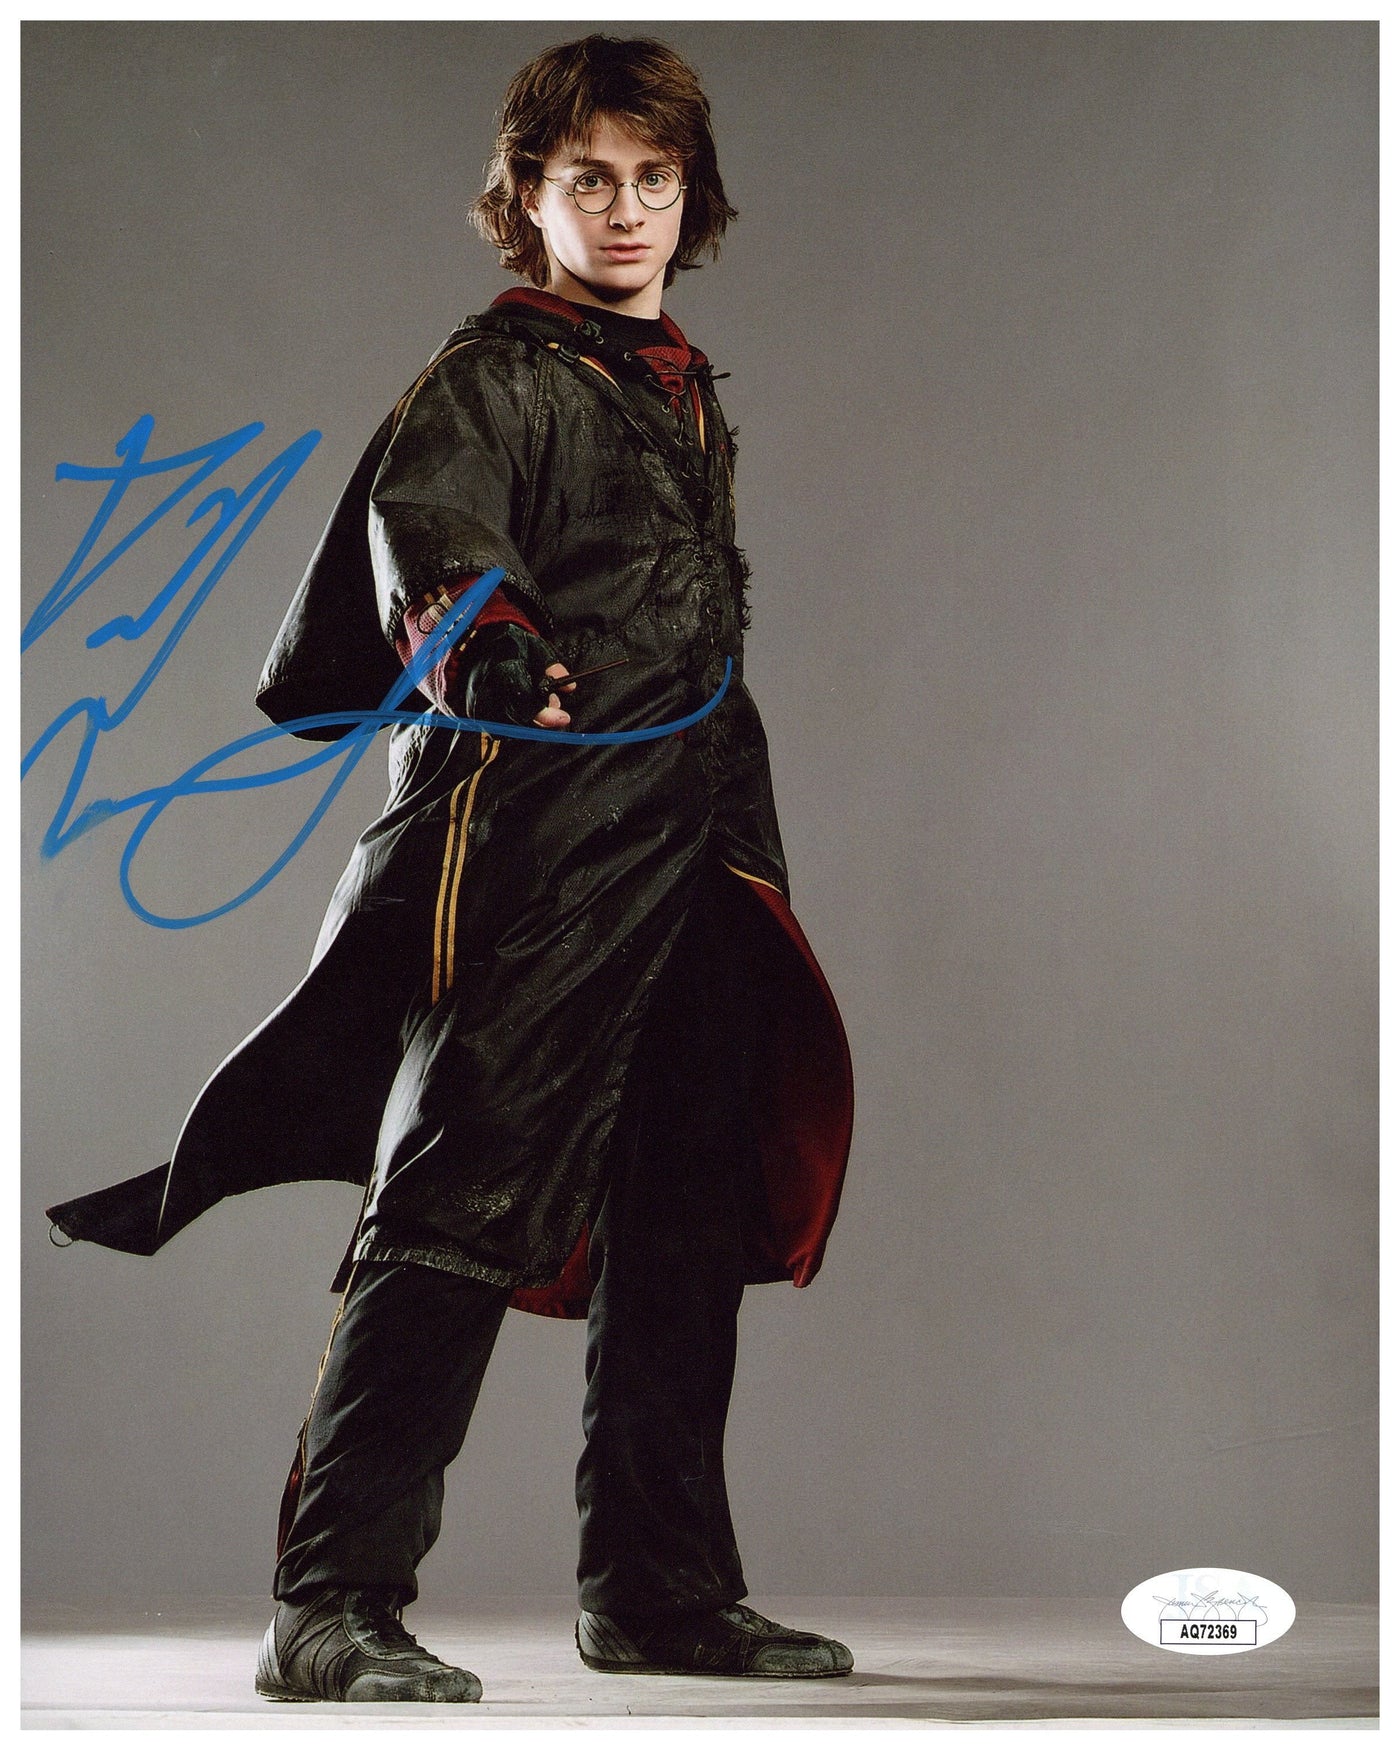 Daniel Radcliffe Signed 8x10 Photo Harry Potter Autographed JSA COA #5